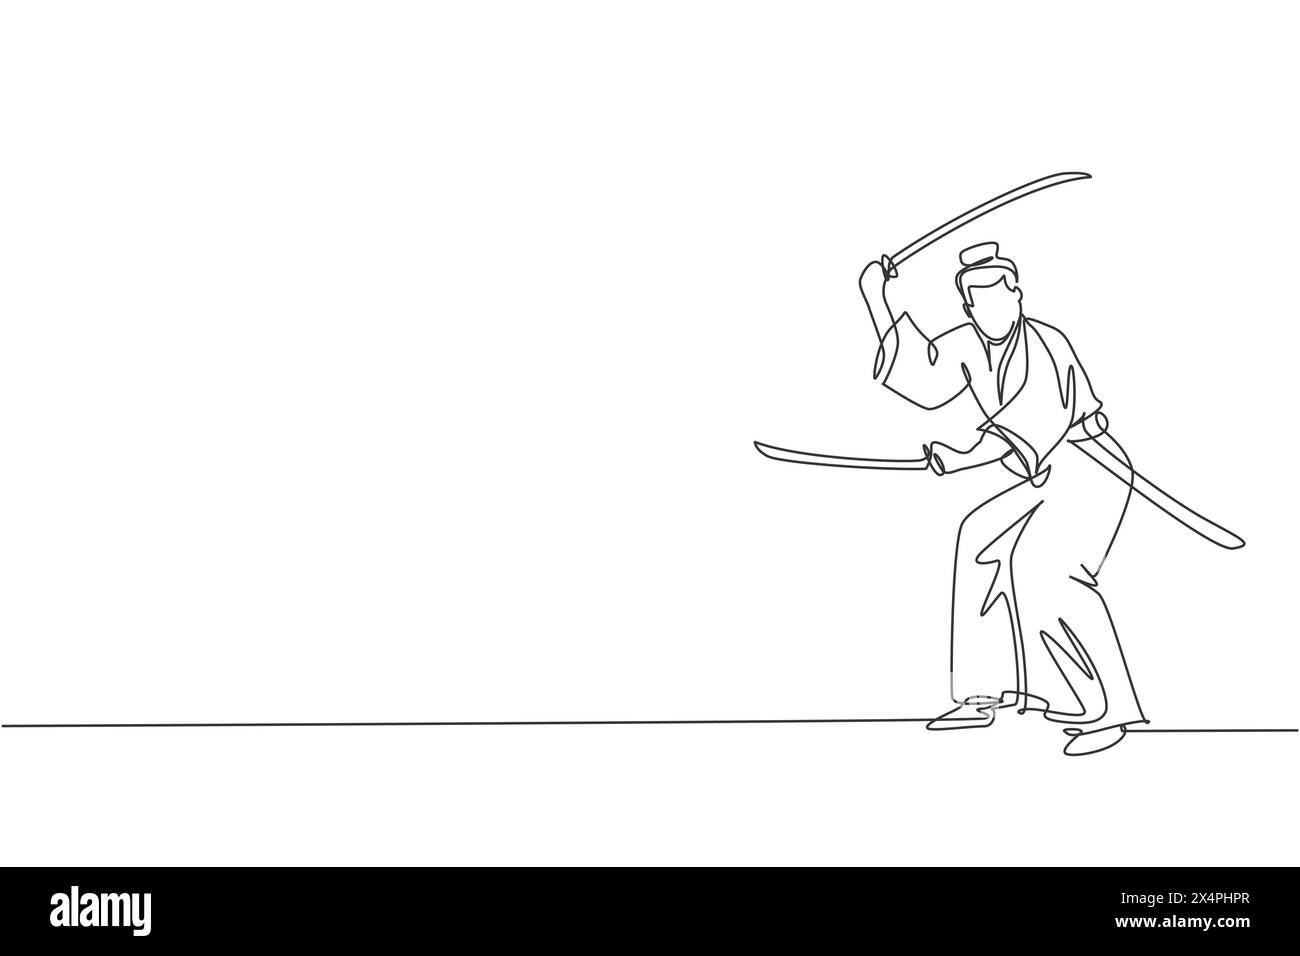 One single line drawing of young Japanese samurai warrior holding katana sword practicing at dojo center graphic vector illustration. Combative martia Stock Vector